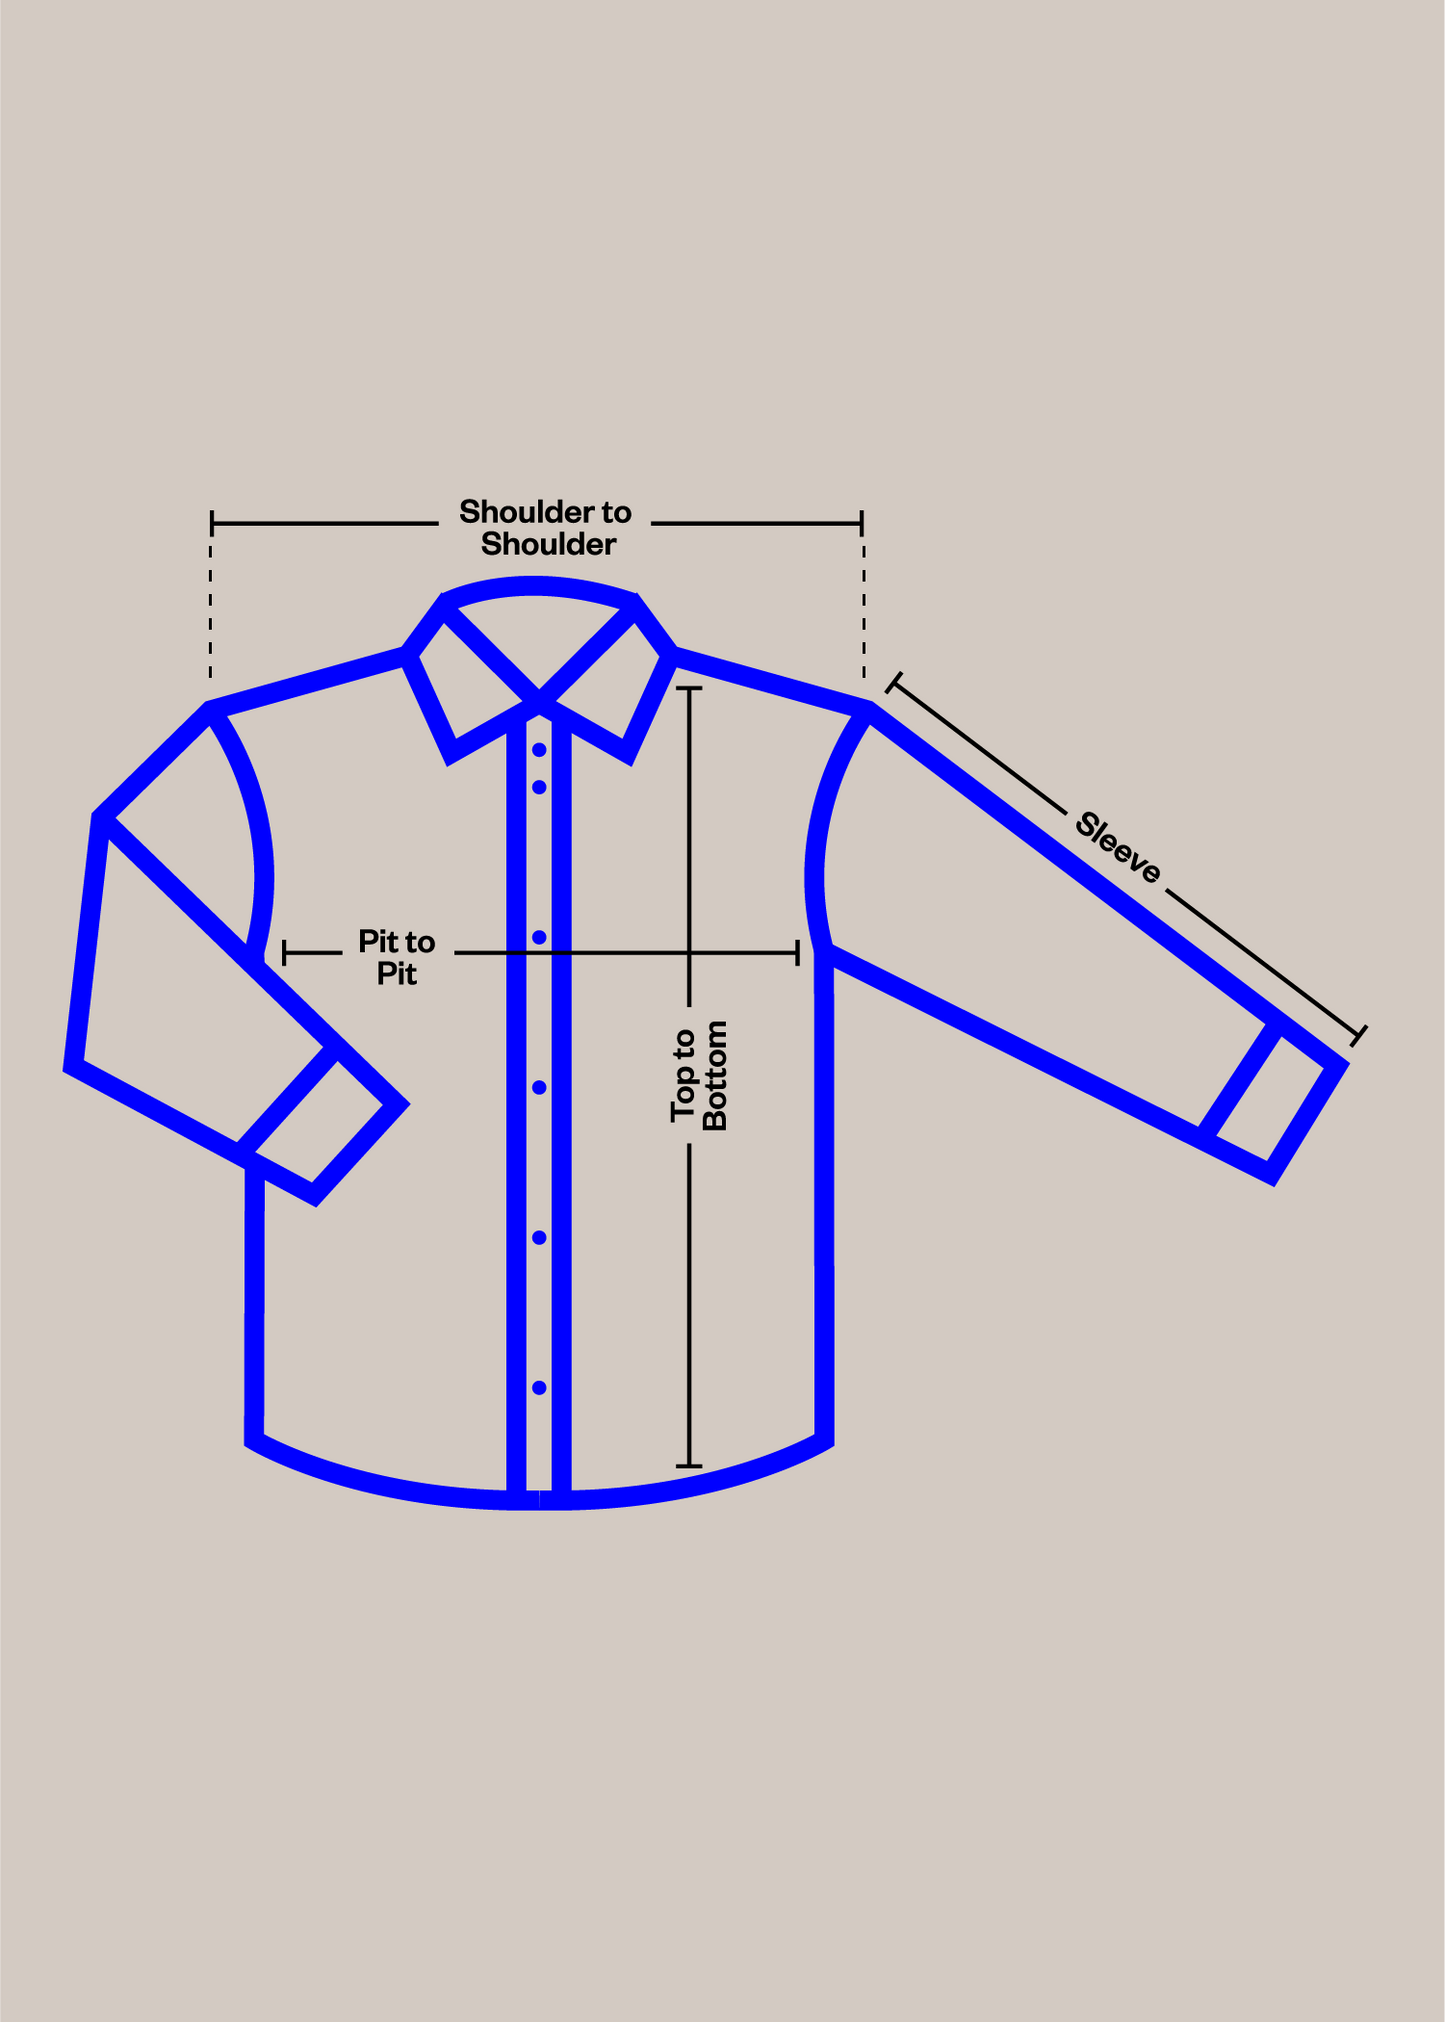 1980s Geometric Pattern Cowichan Style Wool Cardigan Size XS/S